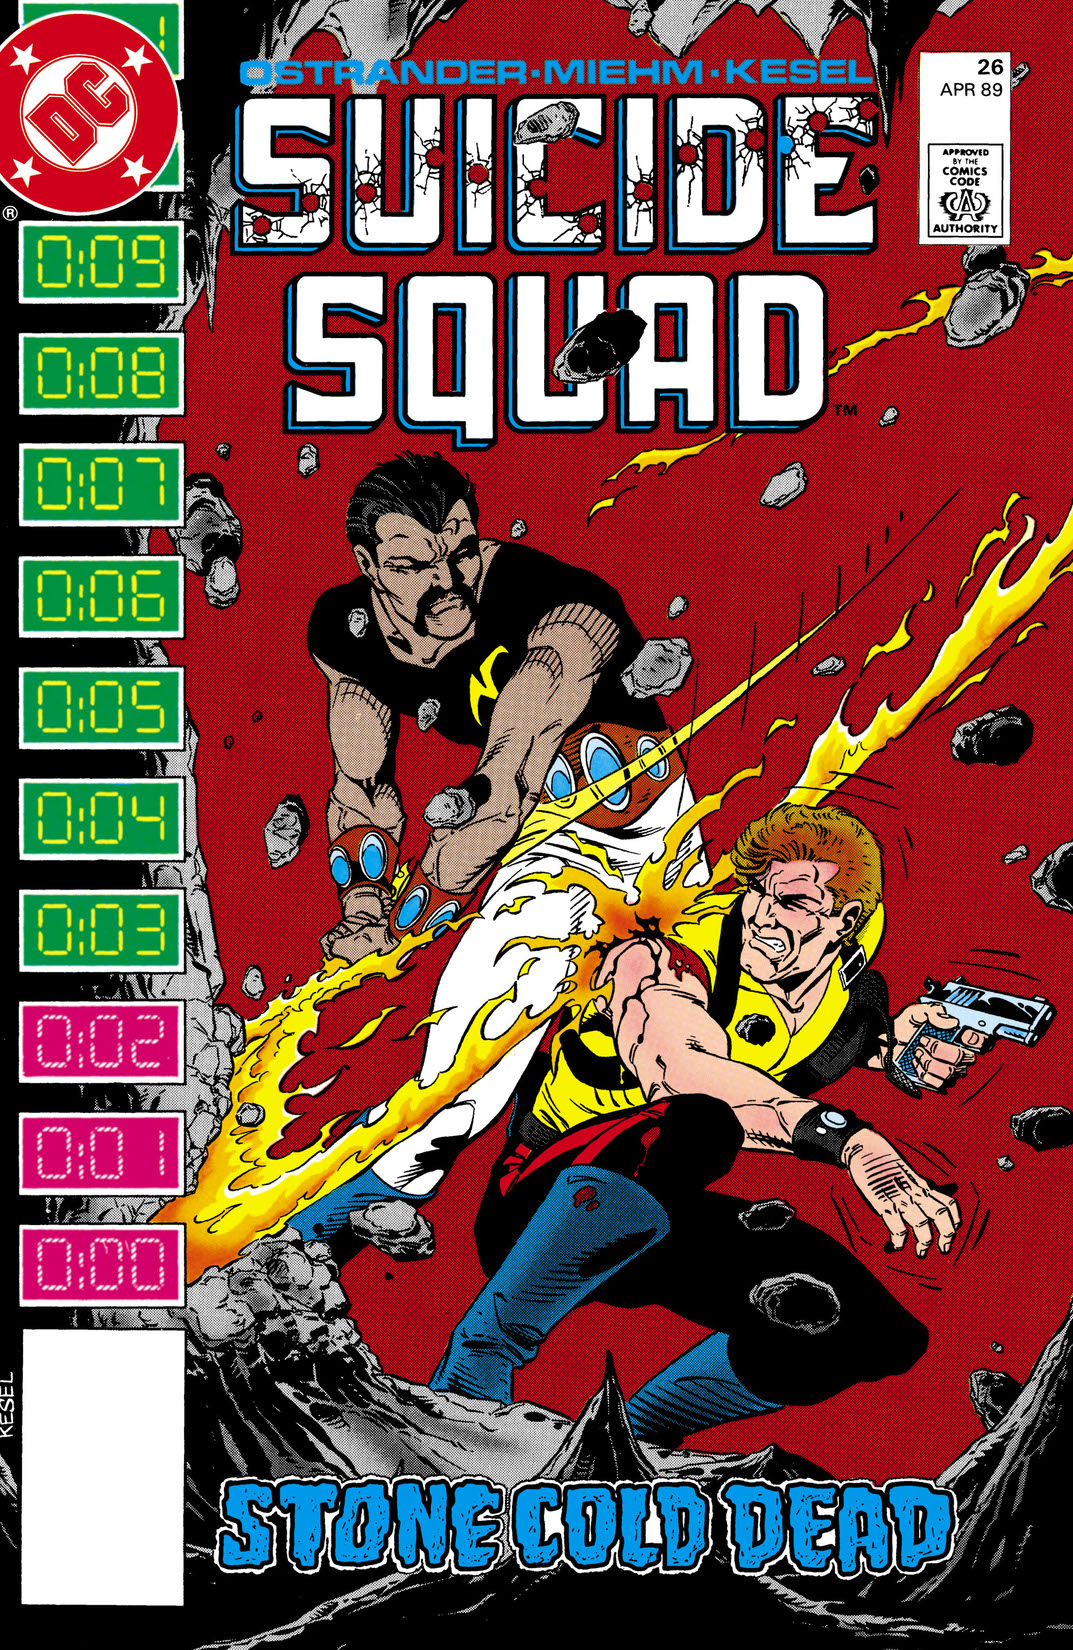 Suicide Squad (1987-) #26 preview images